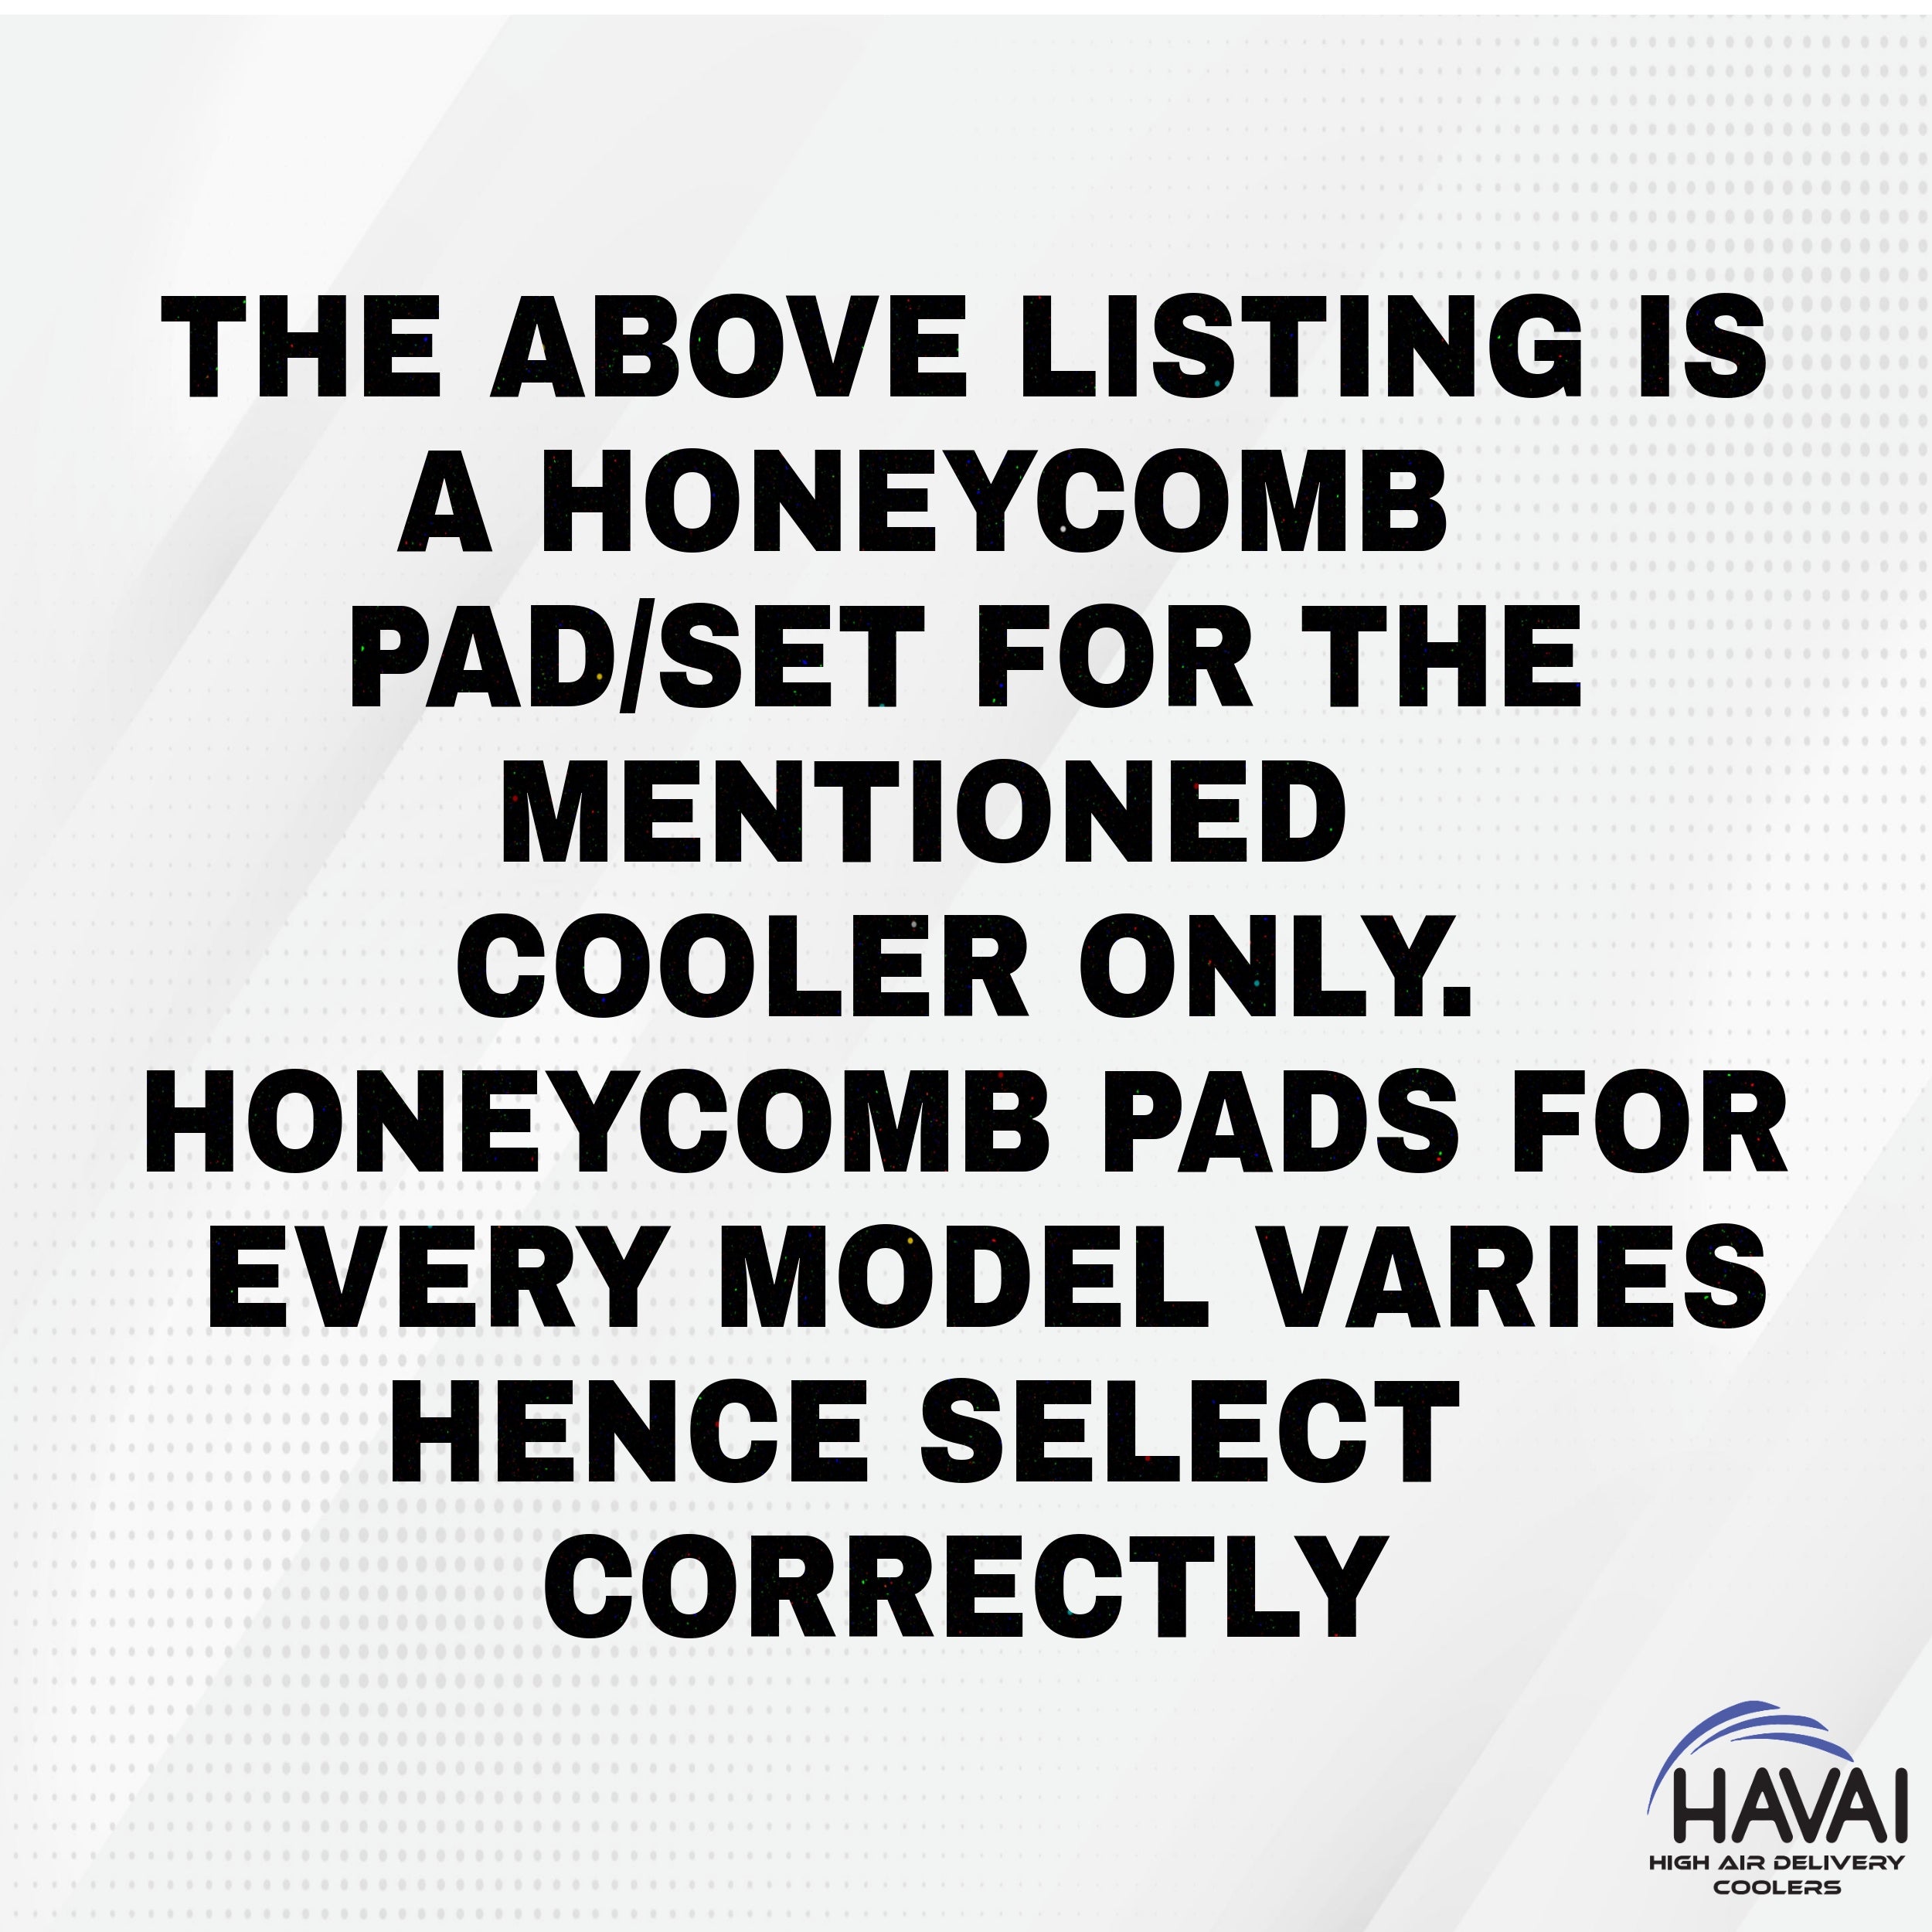 HAVAI Honeycomb Pad for Singer Atlantic Mini/Senior and Voltas VPD 34 Personal Cooler